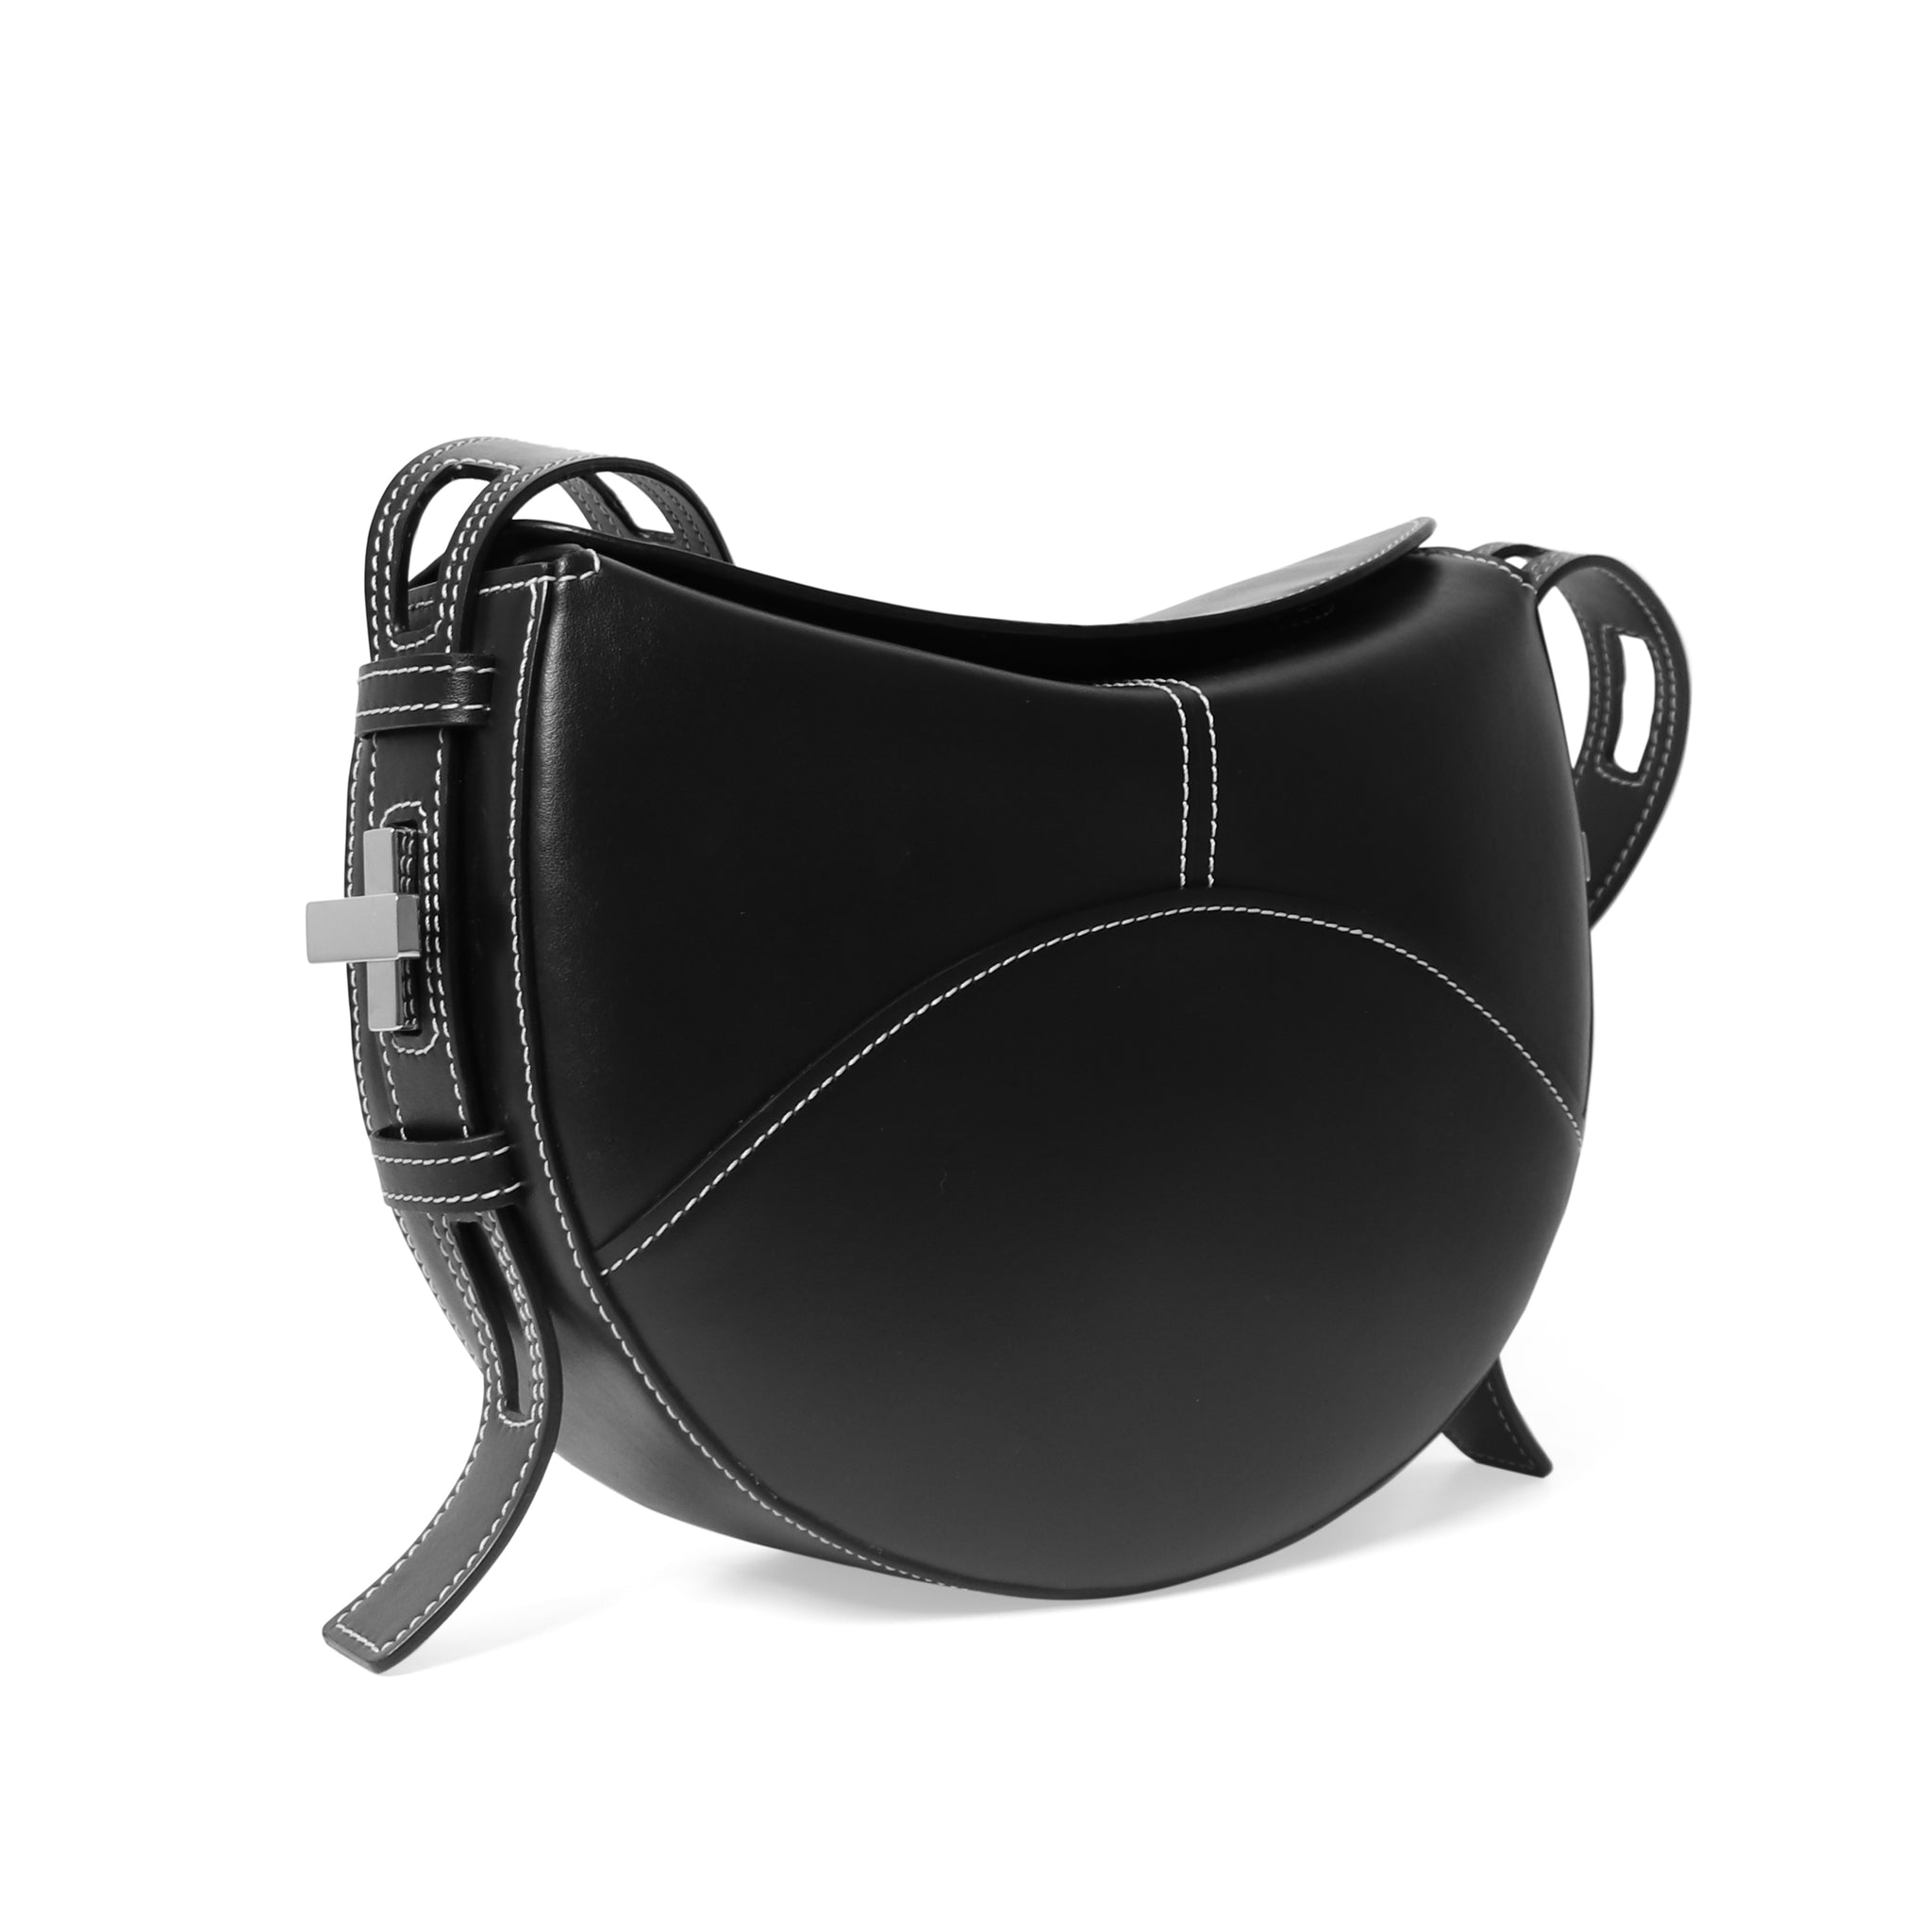 Shaker Twist Bag in black, side view